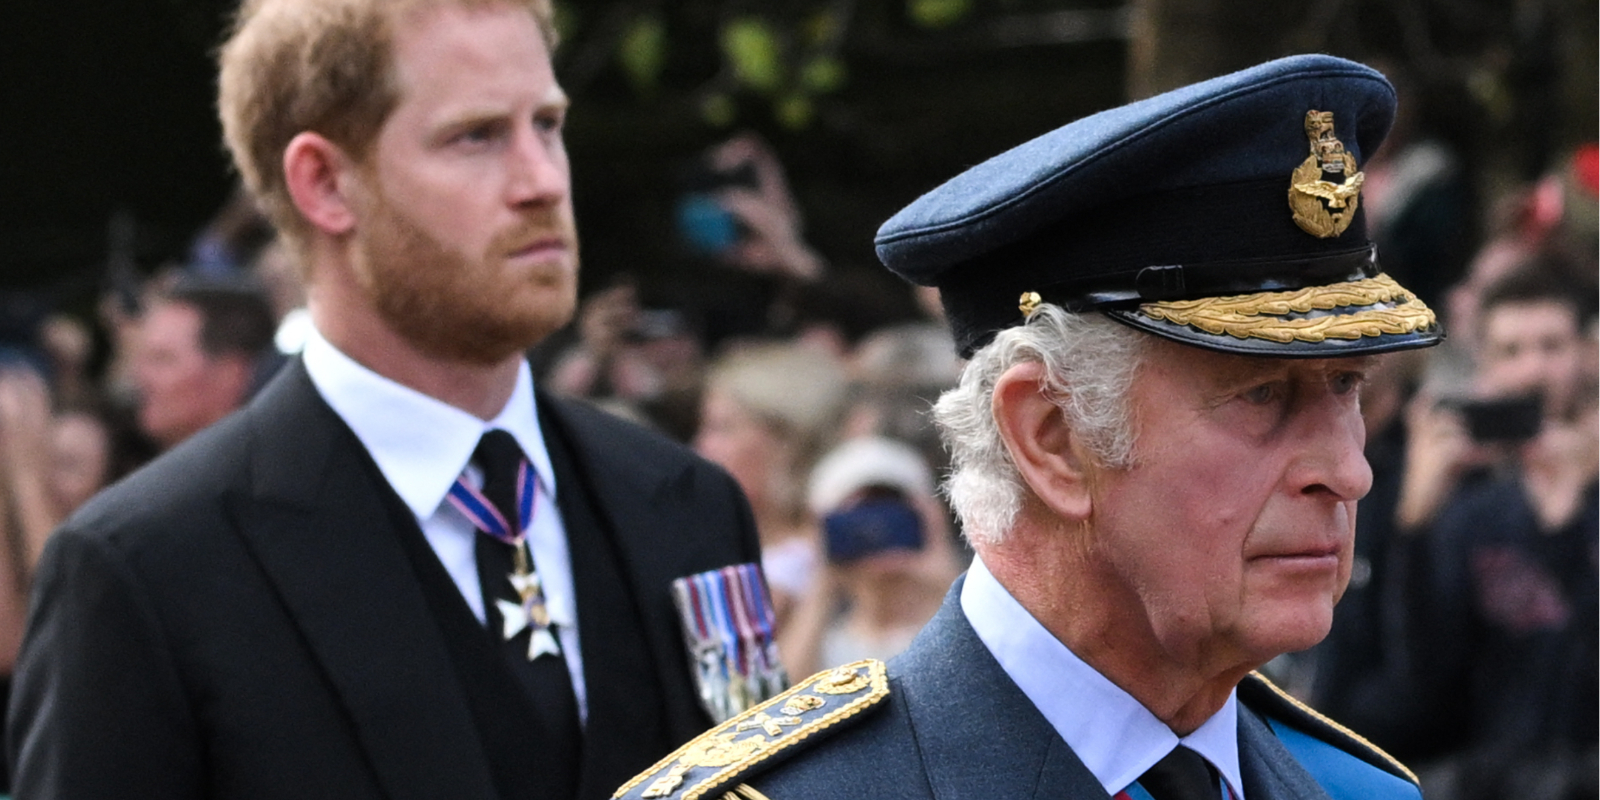 King Charles III May Break Silence on Prince Harry Drama Before Coronation